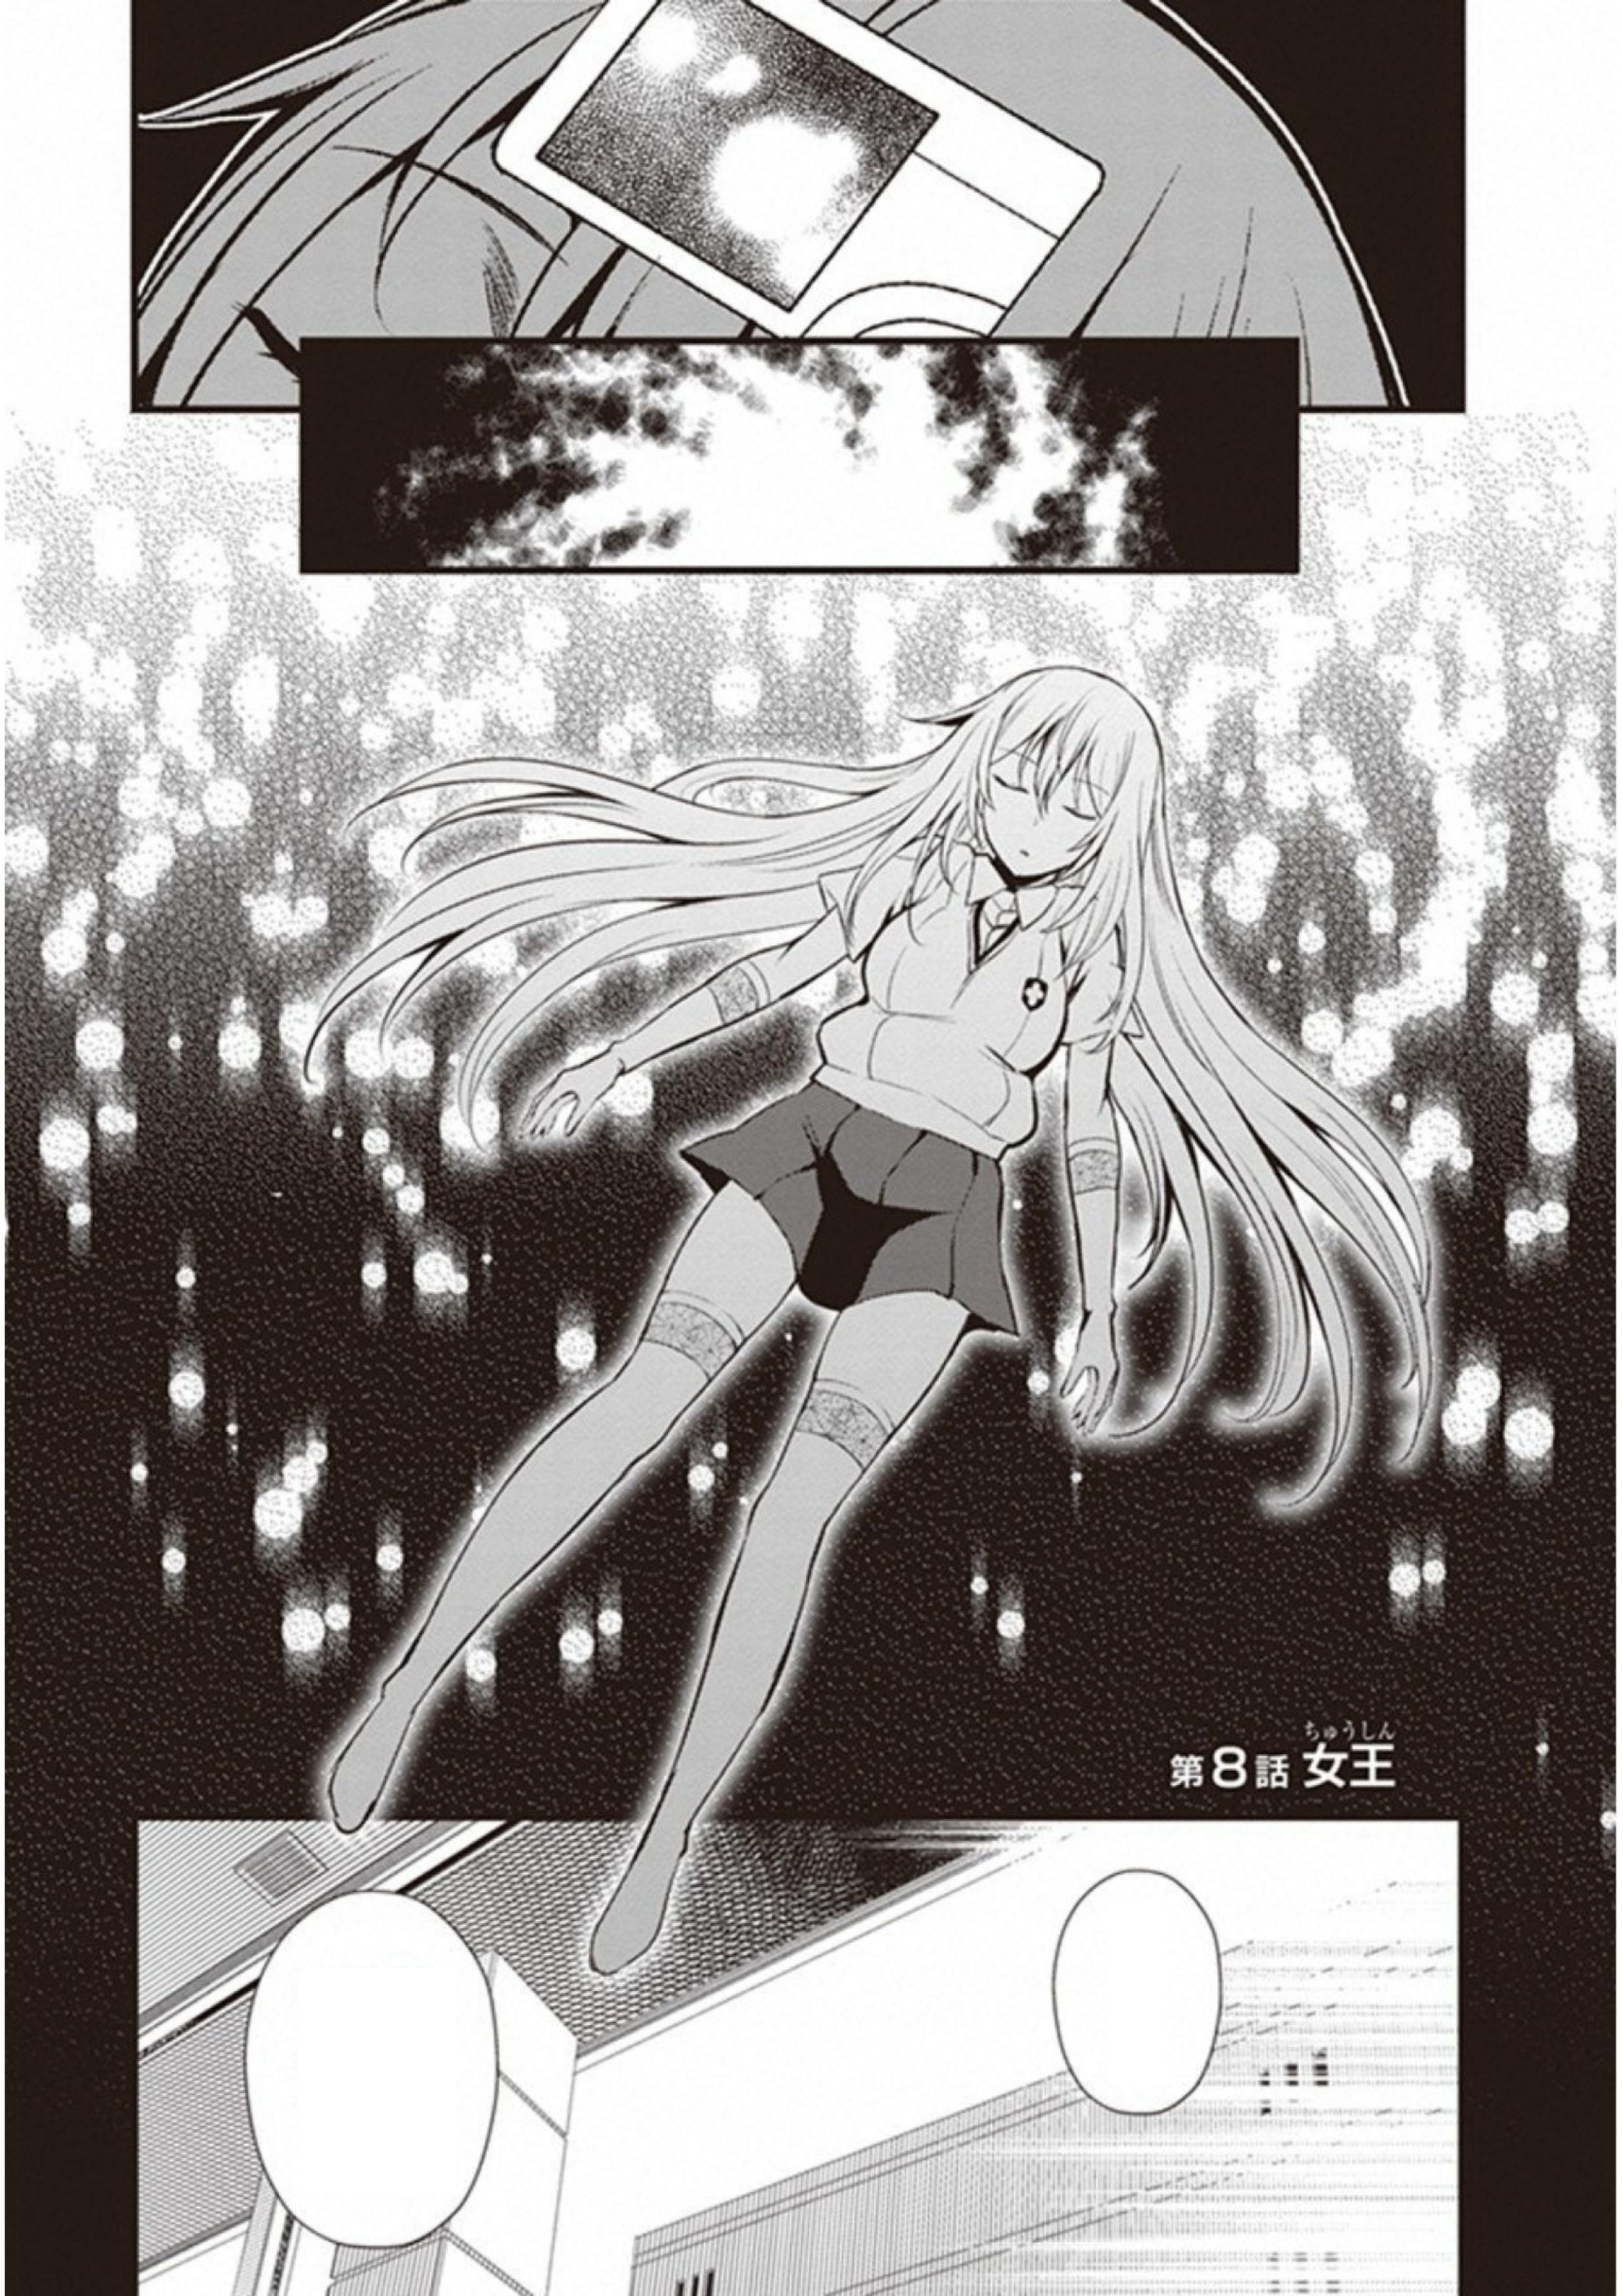 Astral Buddy Manga Chapter 008 | Toaru Majutsu no Index Wiki | Fandom